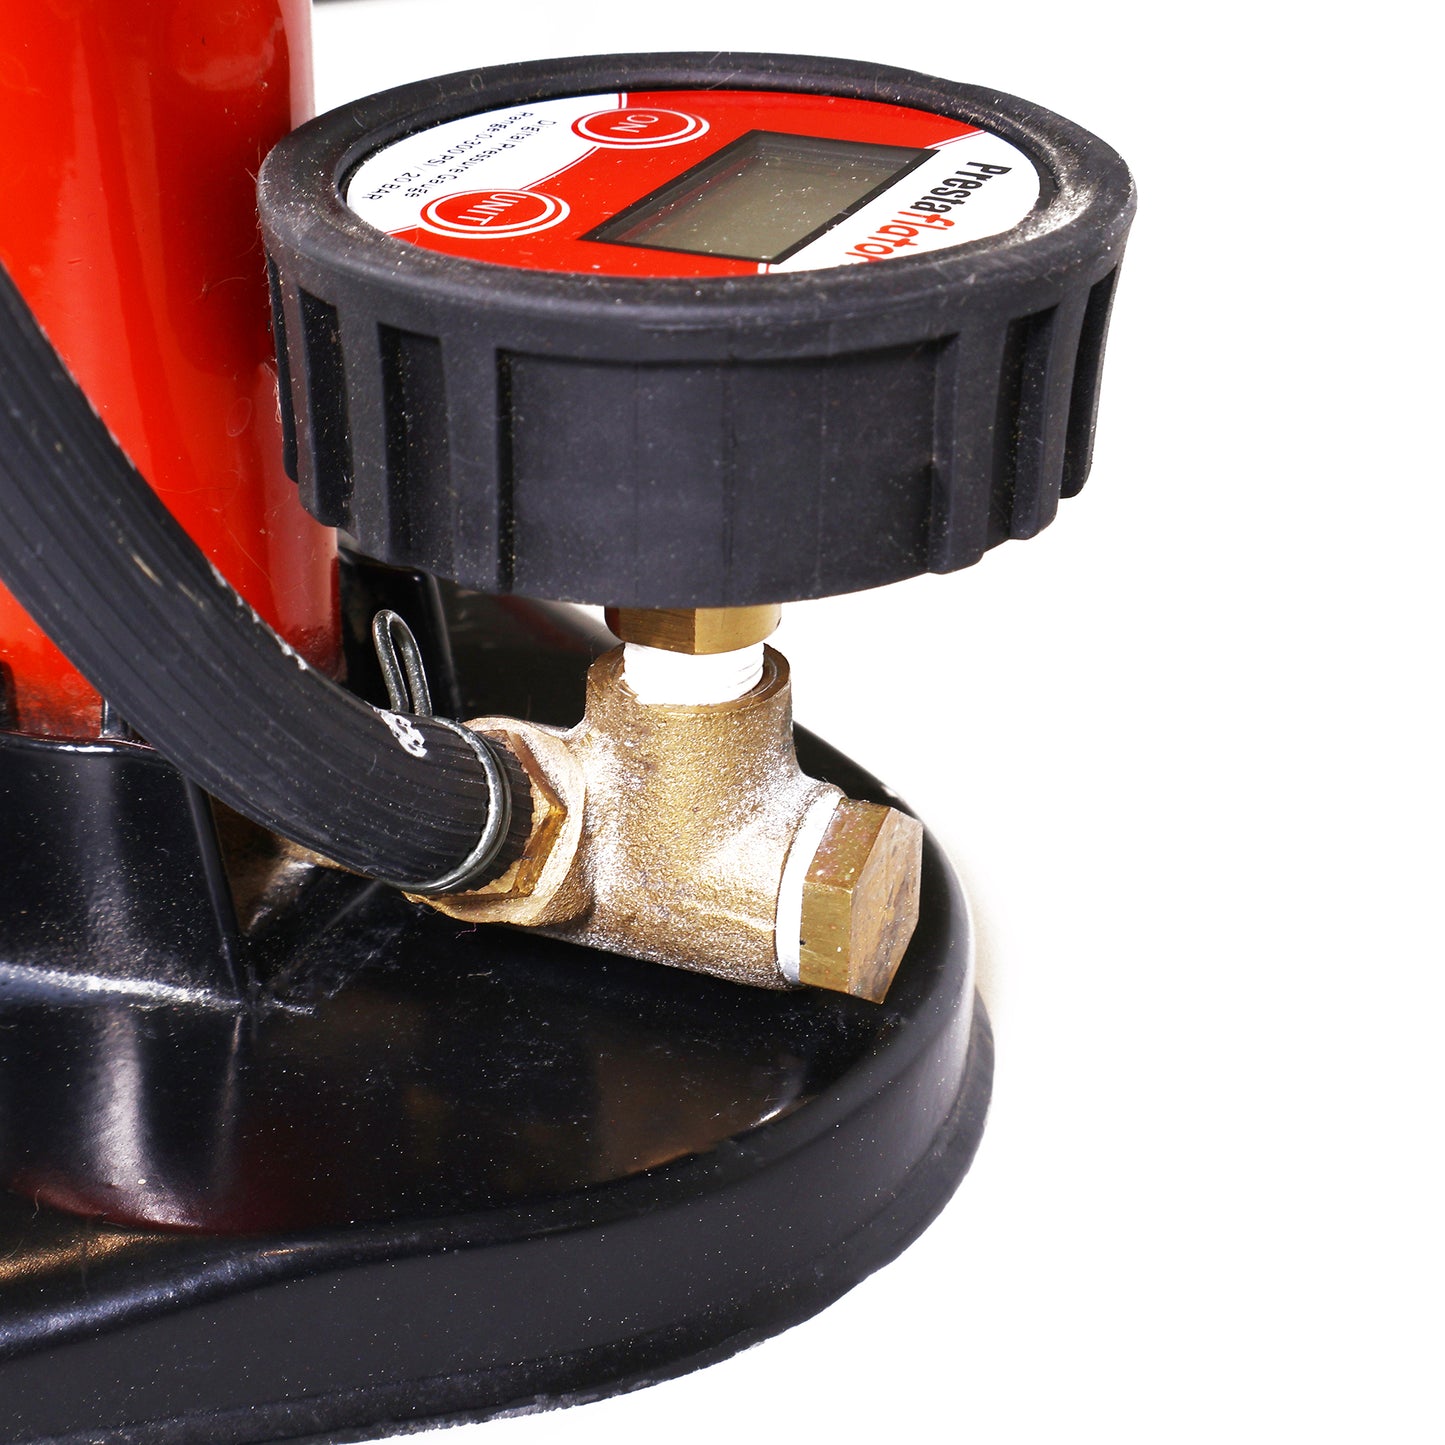 Prestaflator Digital Gauge for Air Compressors & Floor Pumps